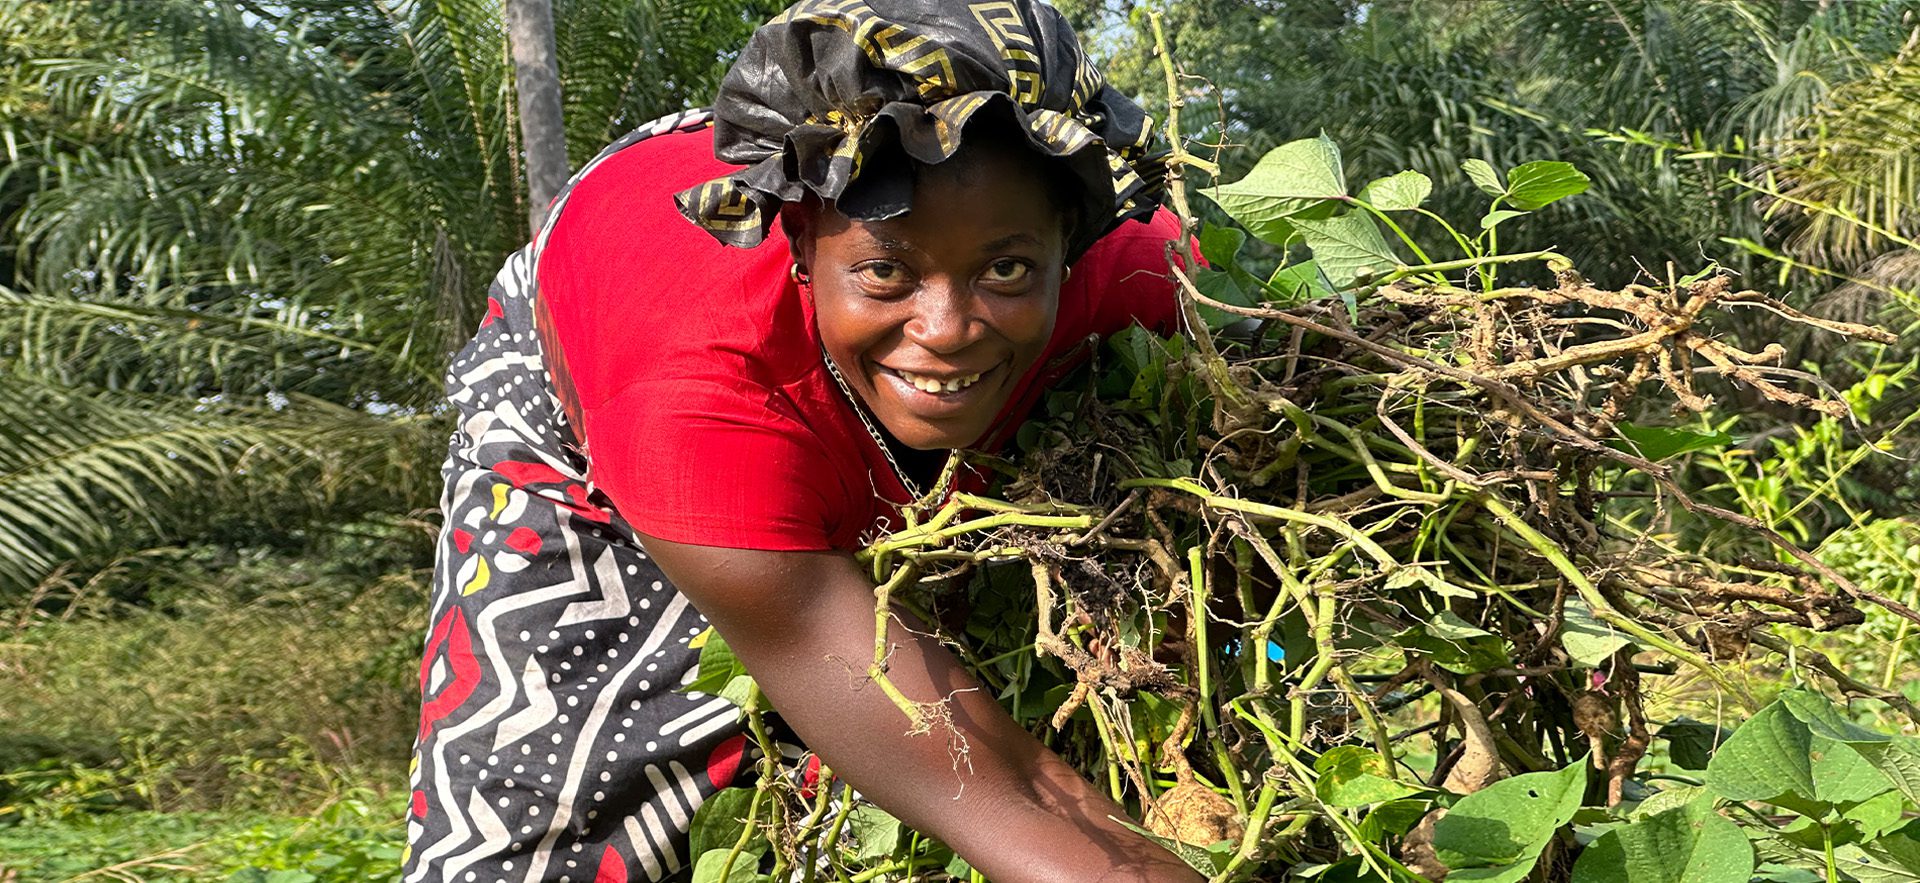 Woman farmer from Sierra Leone harvests her crop.